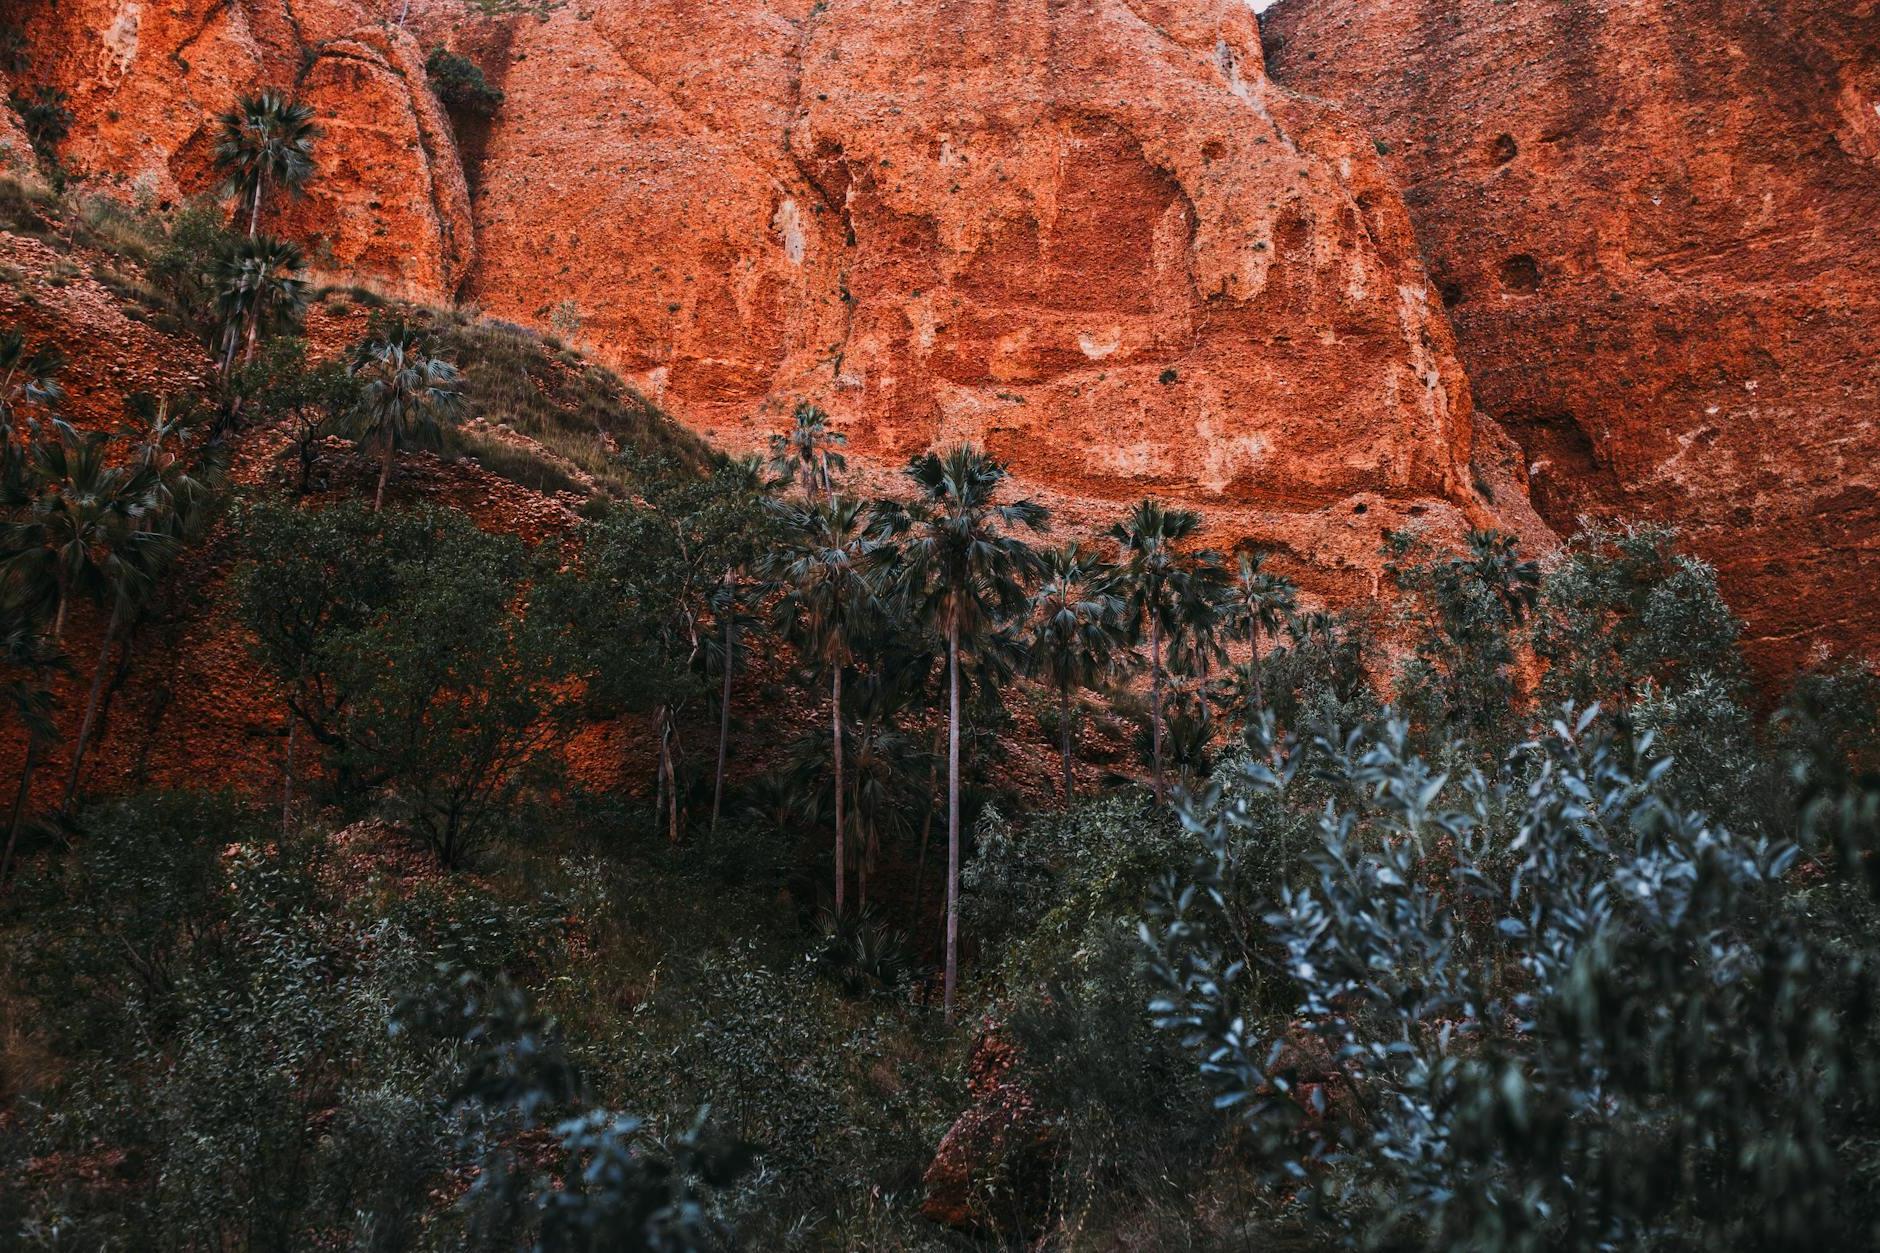 Rocky formations near green trees